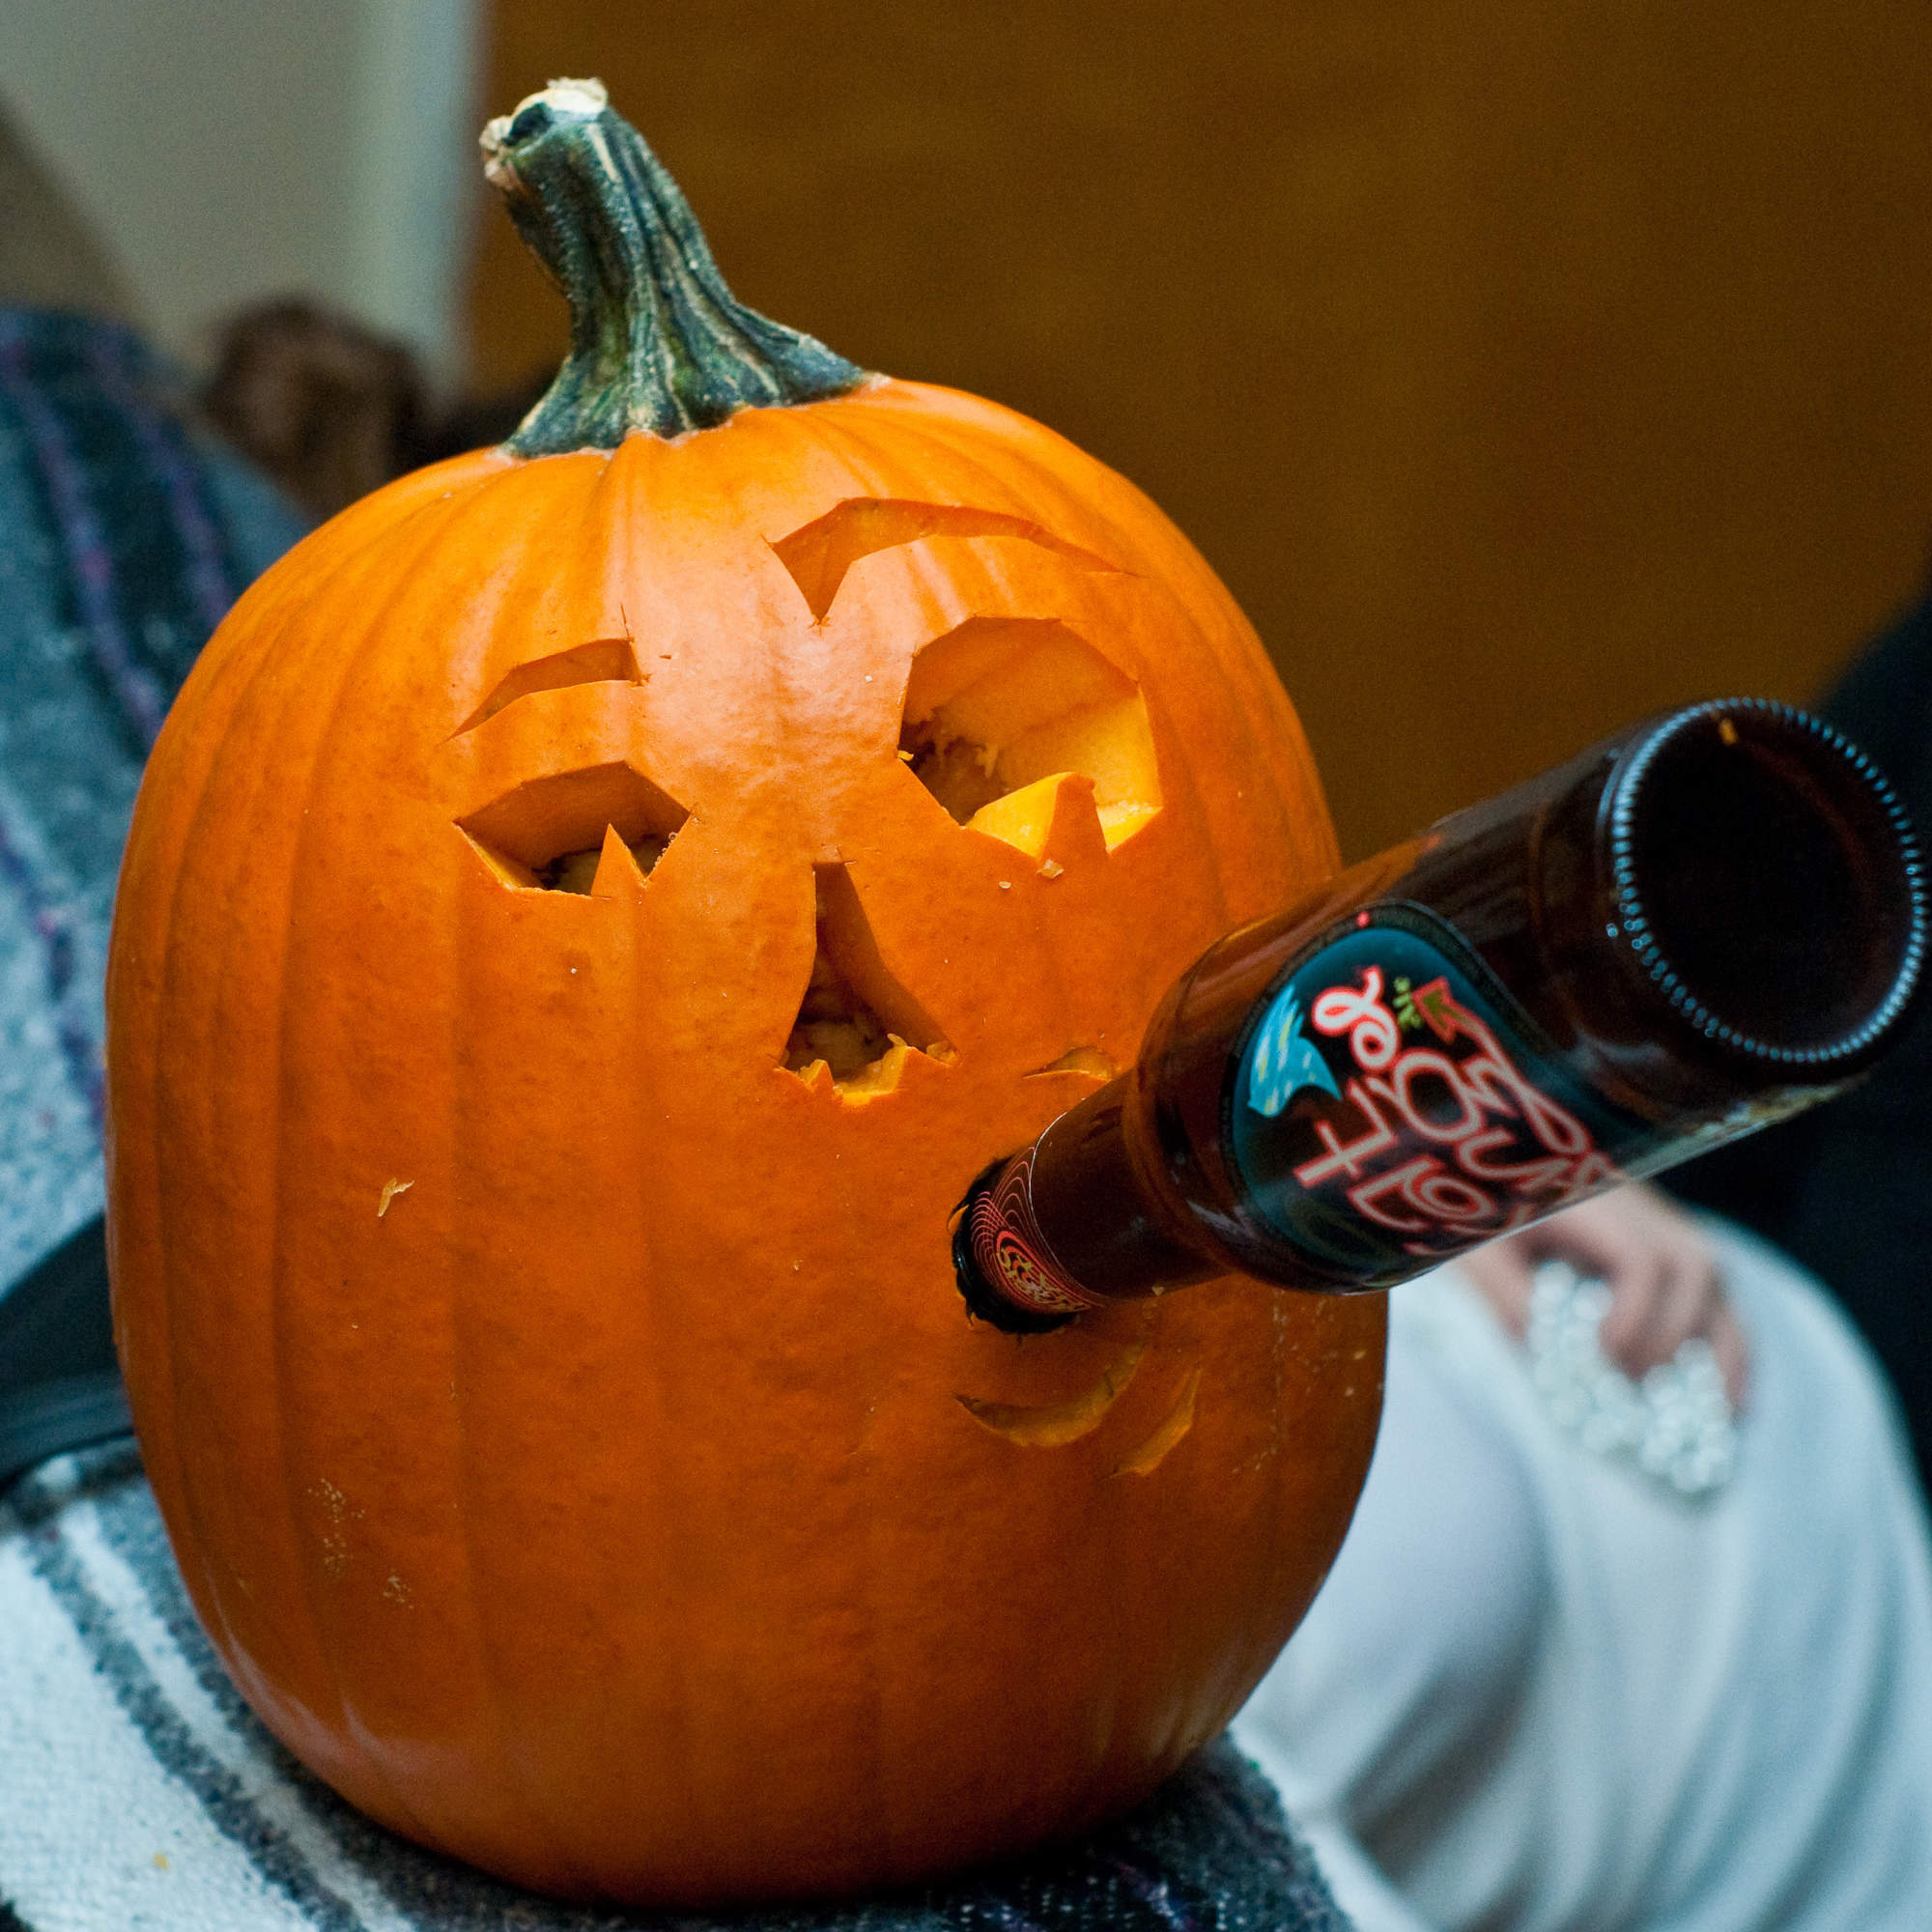 The Genius Way to Make a Pumpkin Into a Beer Cooler Halloween